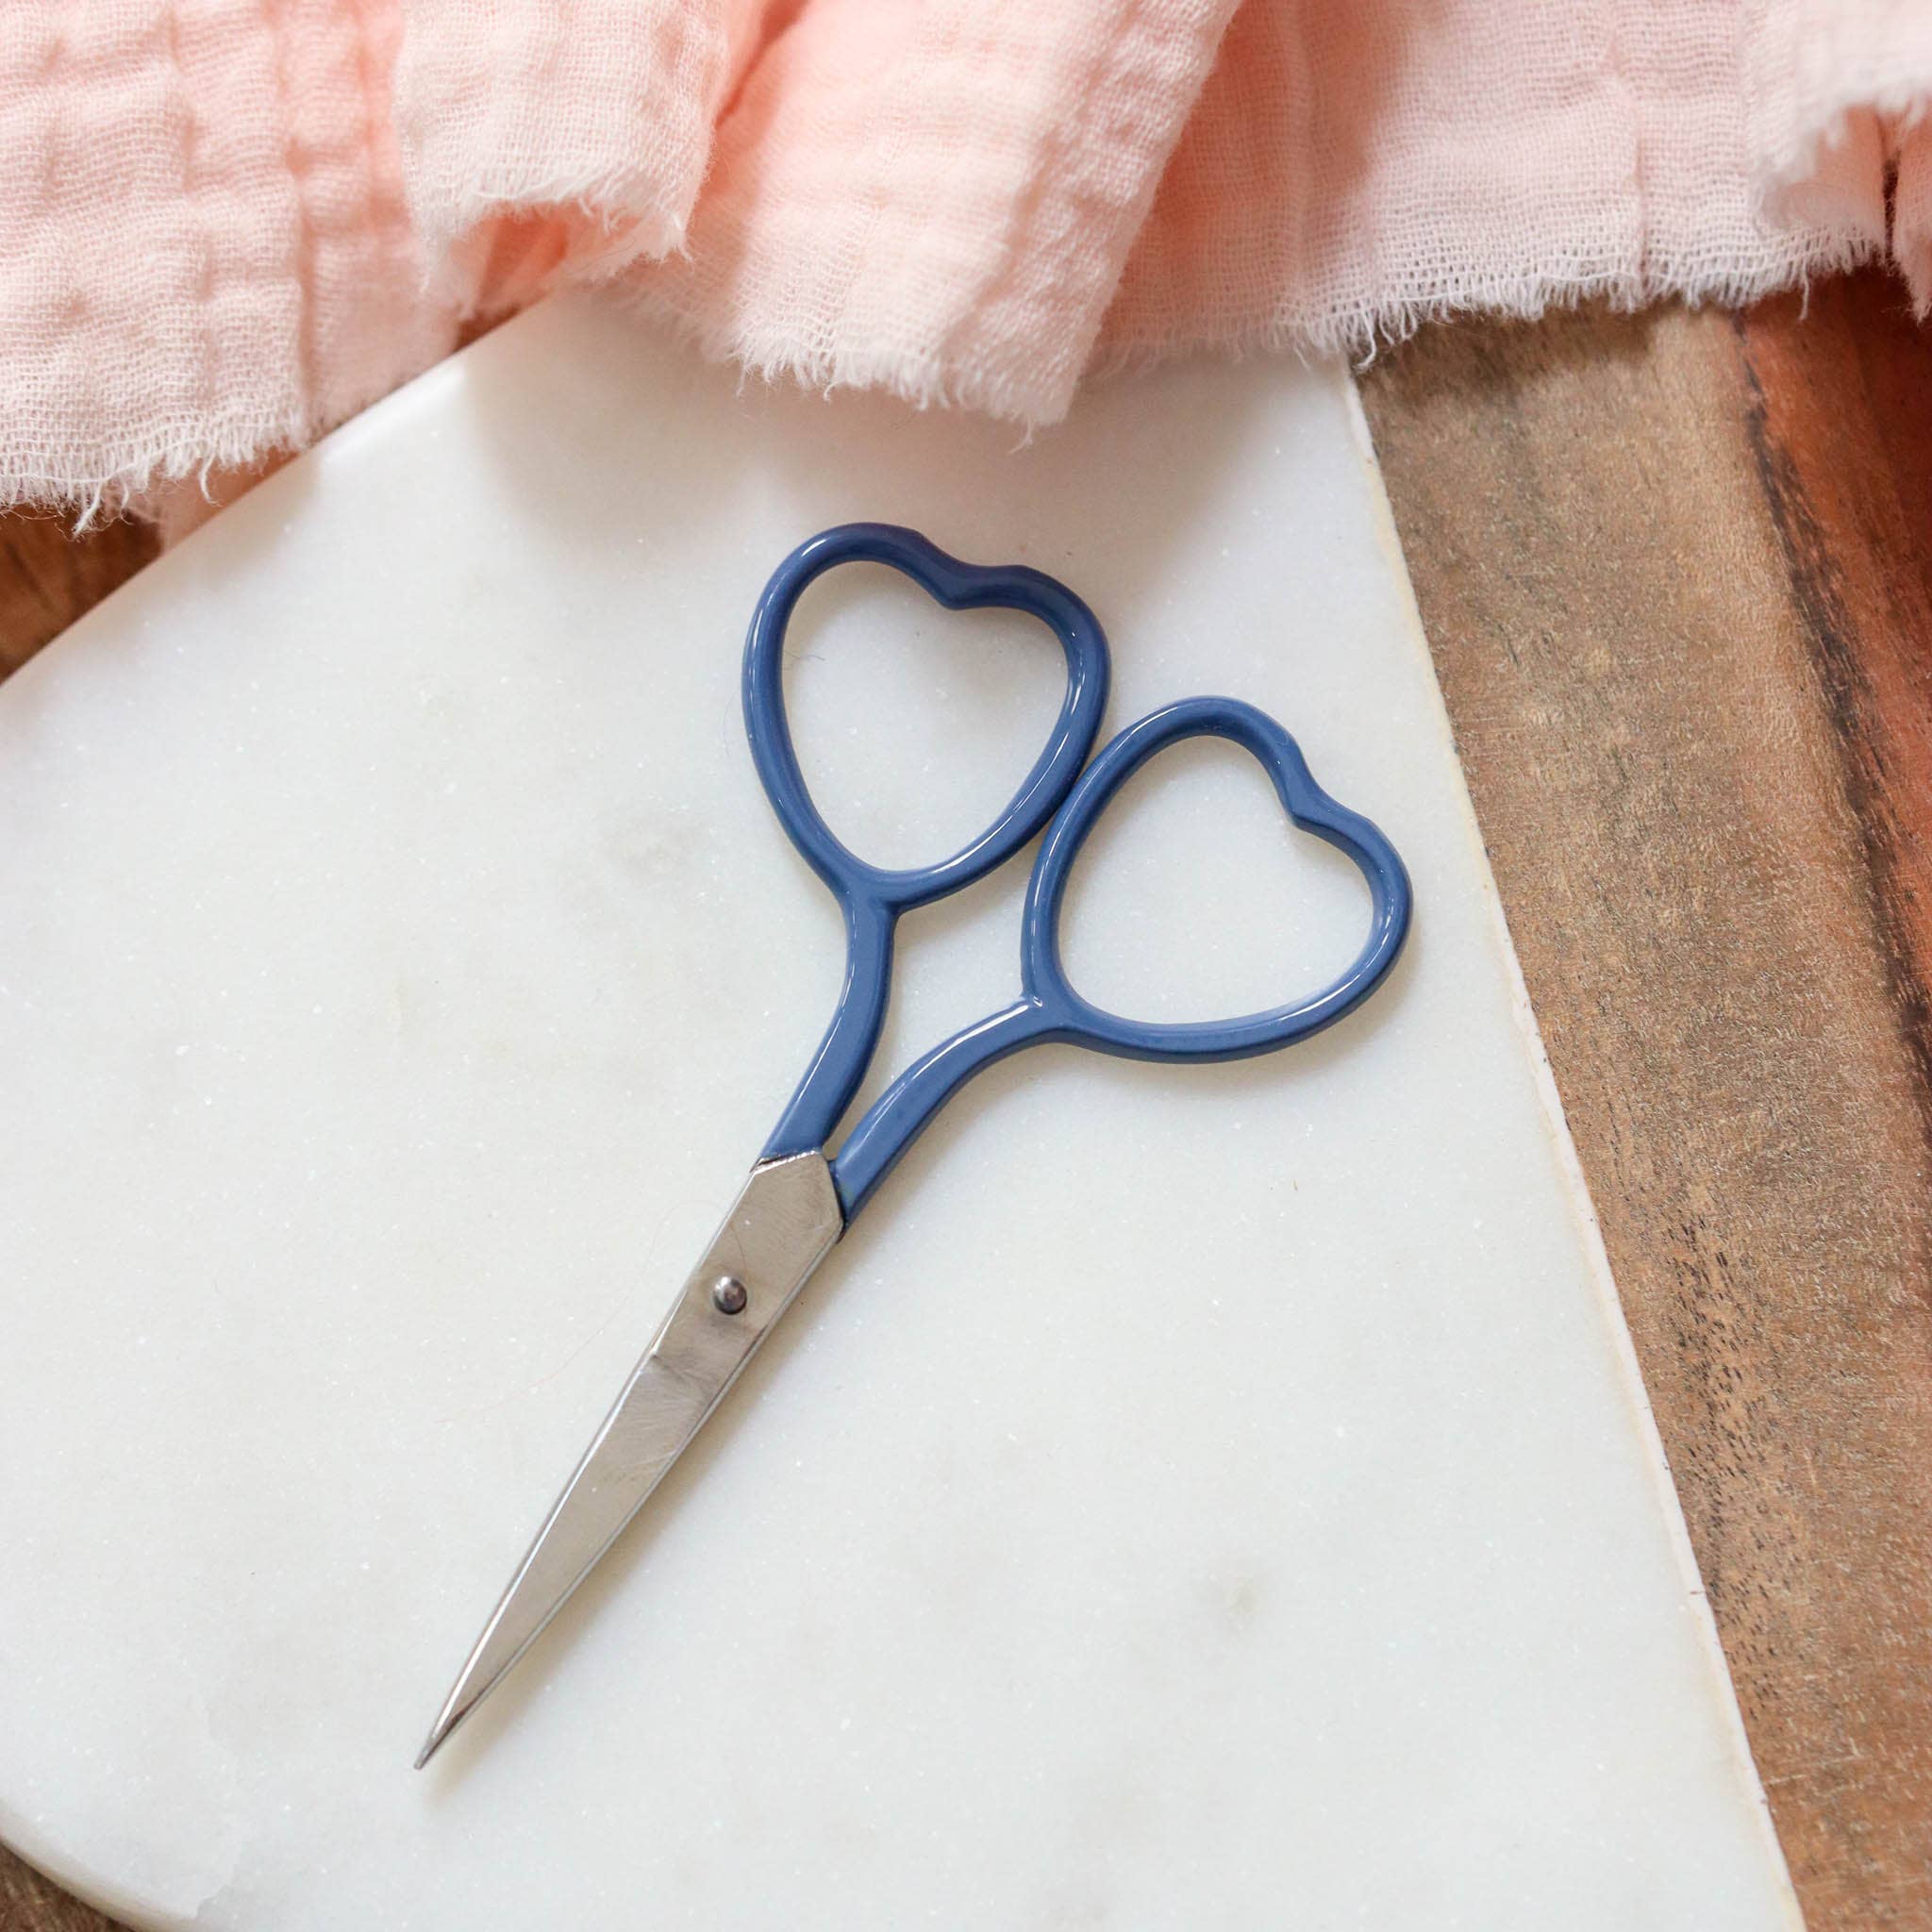 Heart Shaped Embroidery Scissors Embroidery Scissors, Cute Scissors 